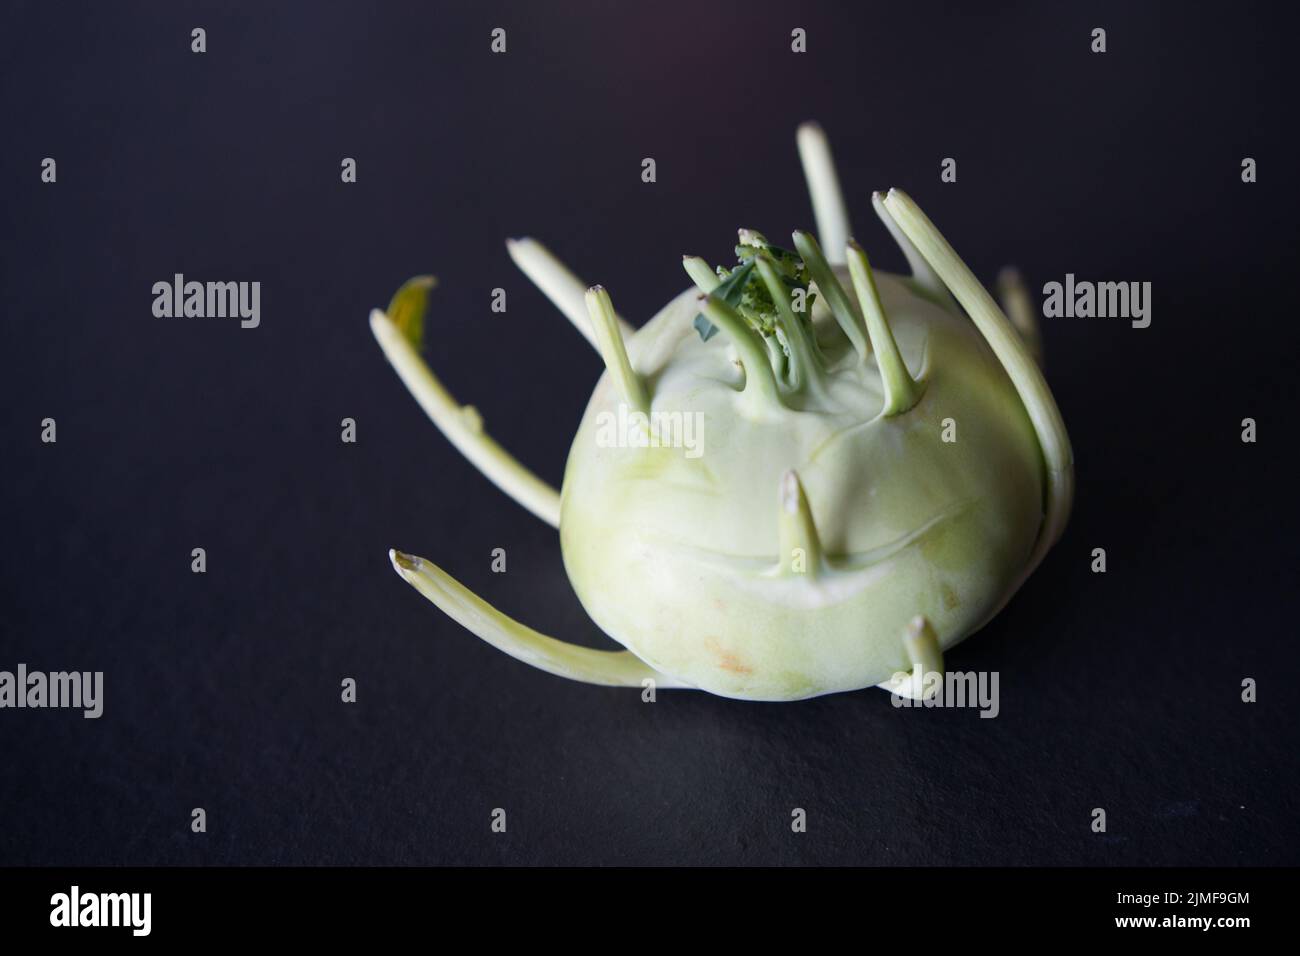 German turnip or kohlrabi, a strange vegetable with black background Stock Photo